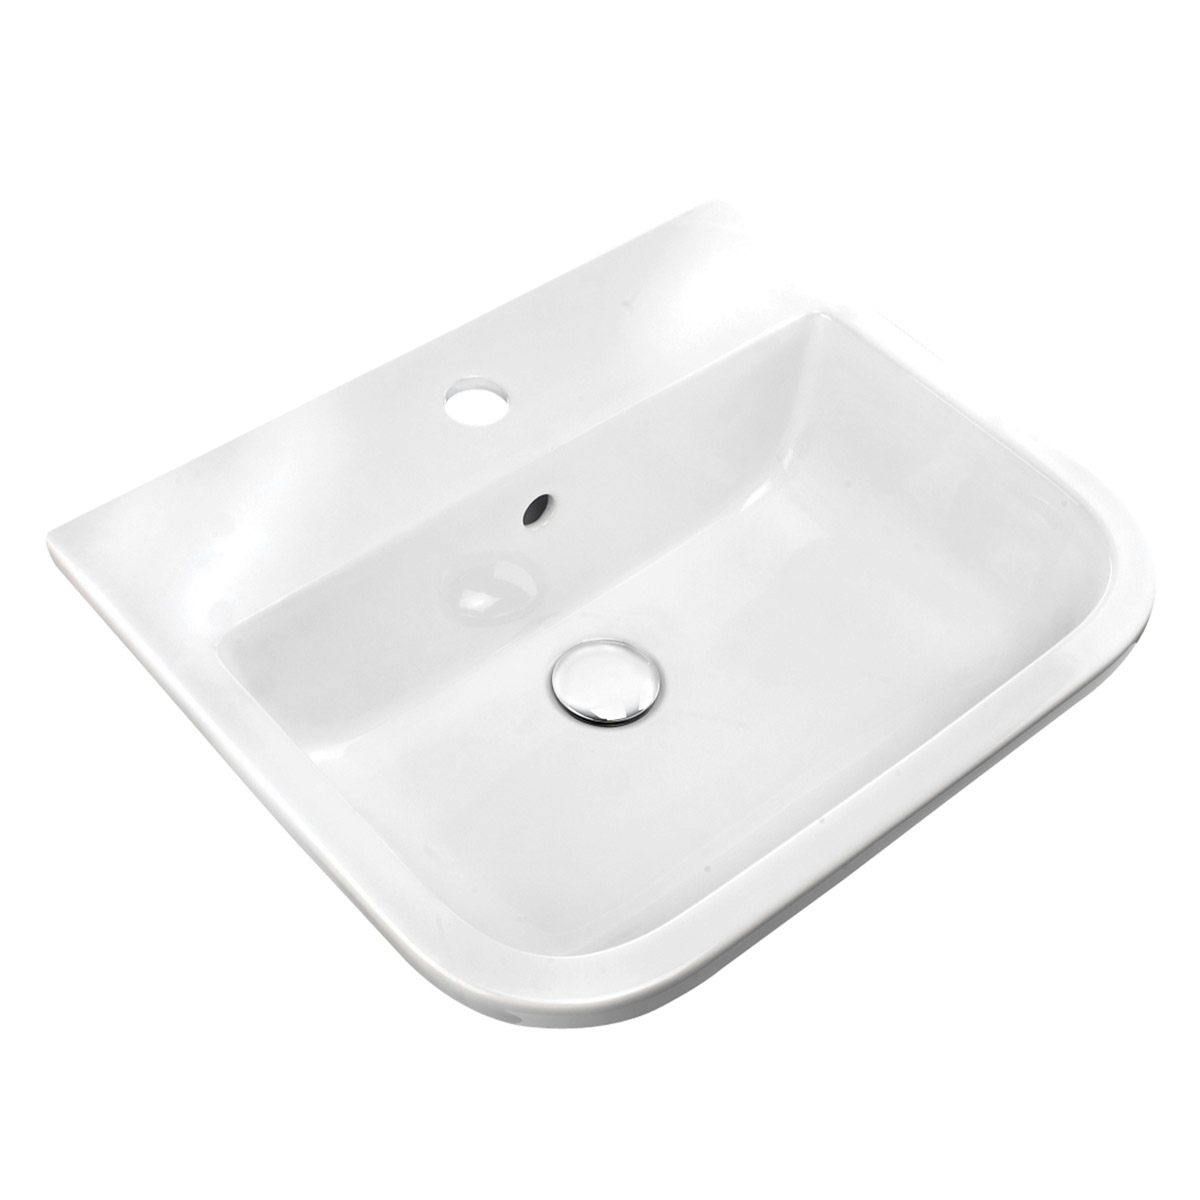 RAK Series 600 1 tap hole inset vanity bowl basin 500mm